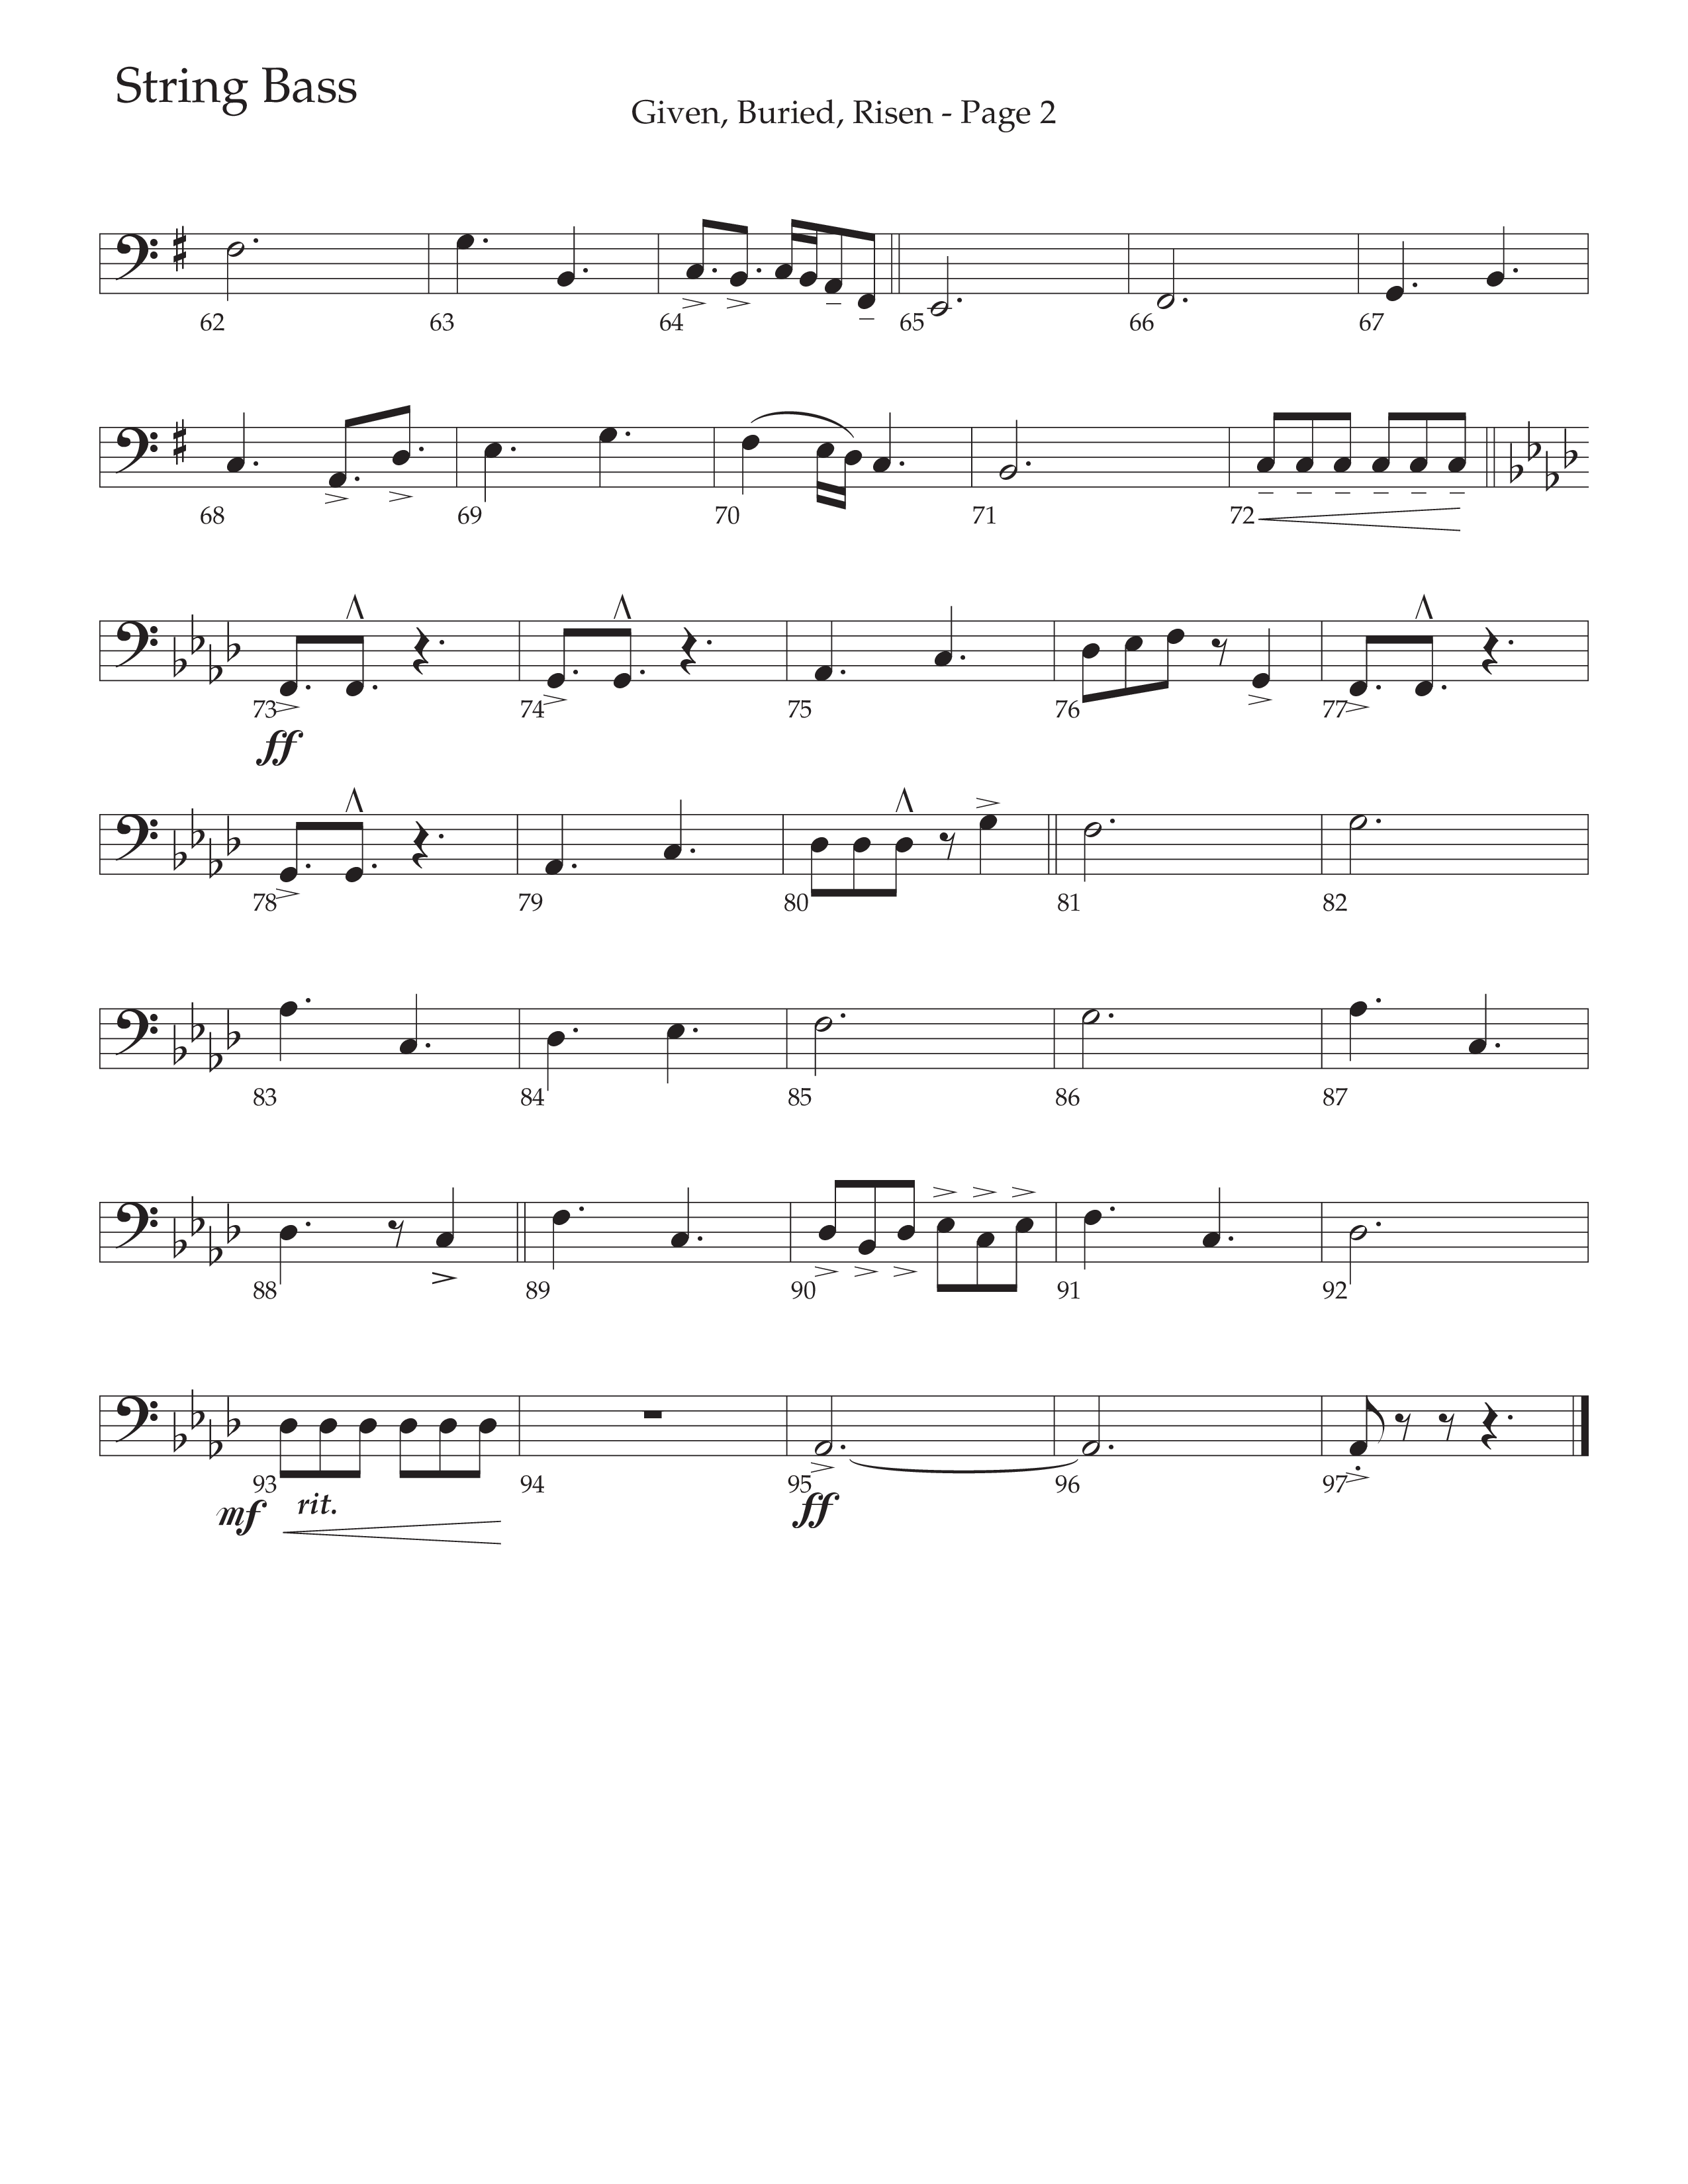 Given Buried Risen (Choral Anthem SATB) String Bass (Daywind Worship / Arr. Phil Nitz)